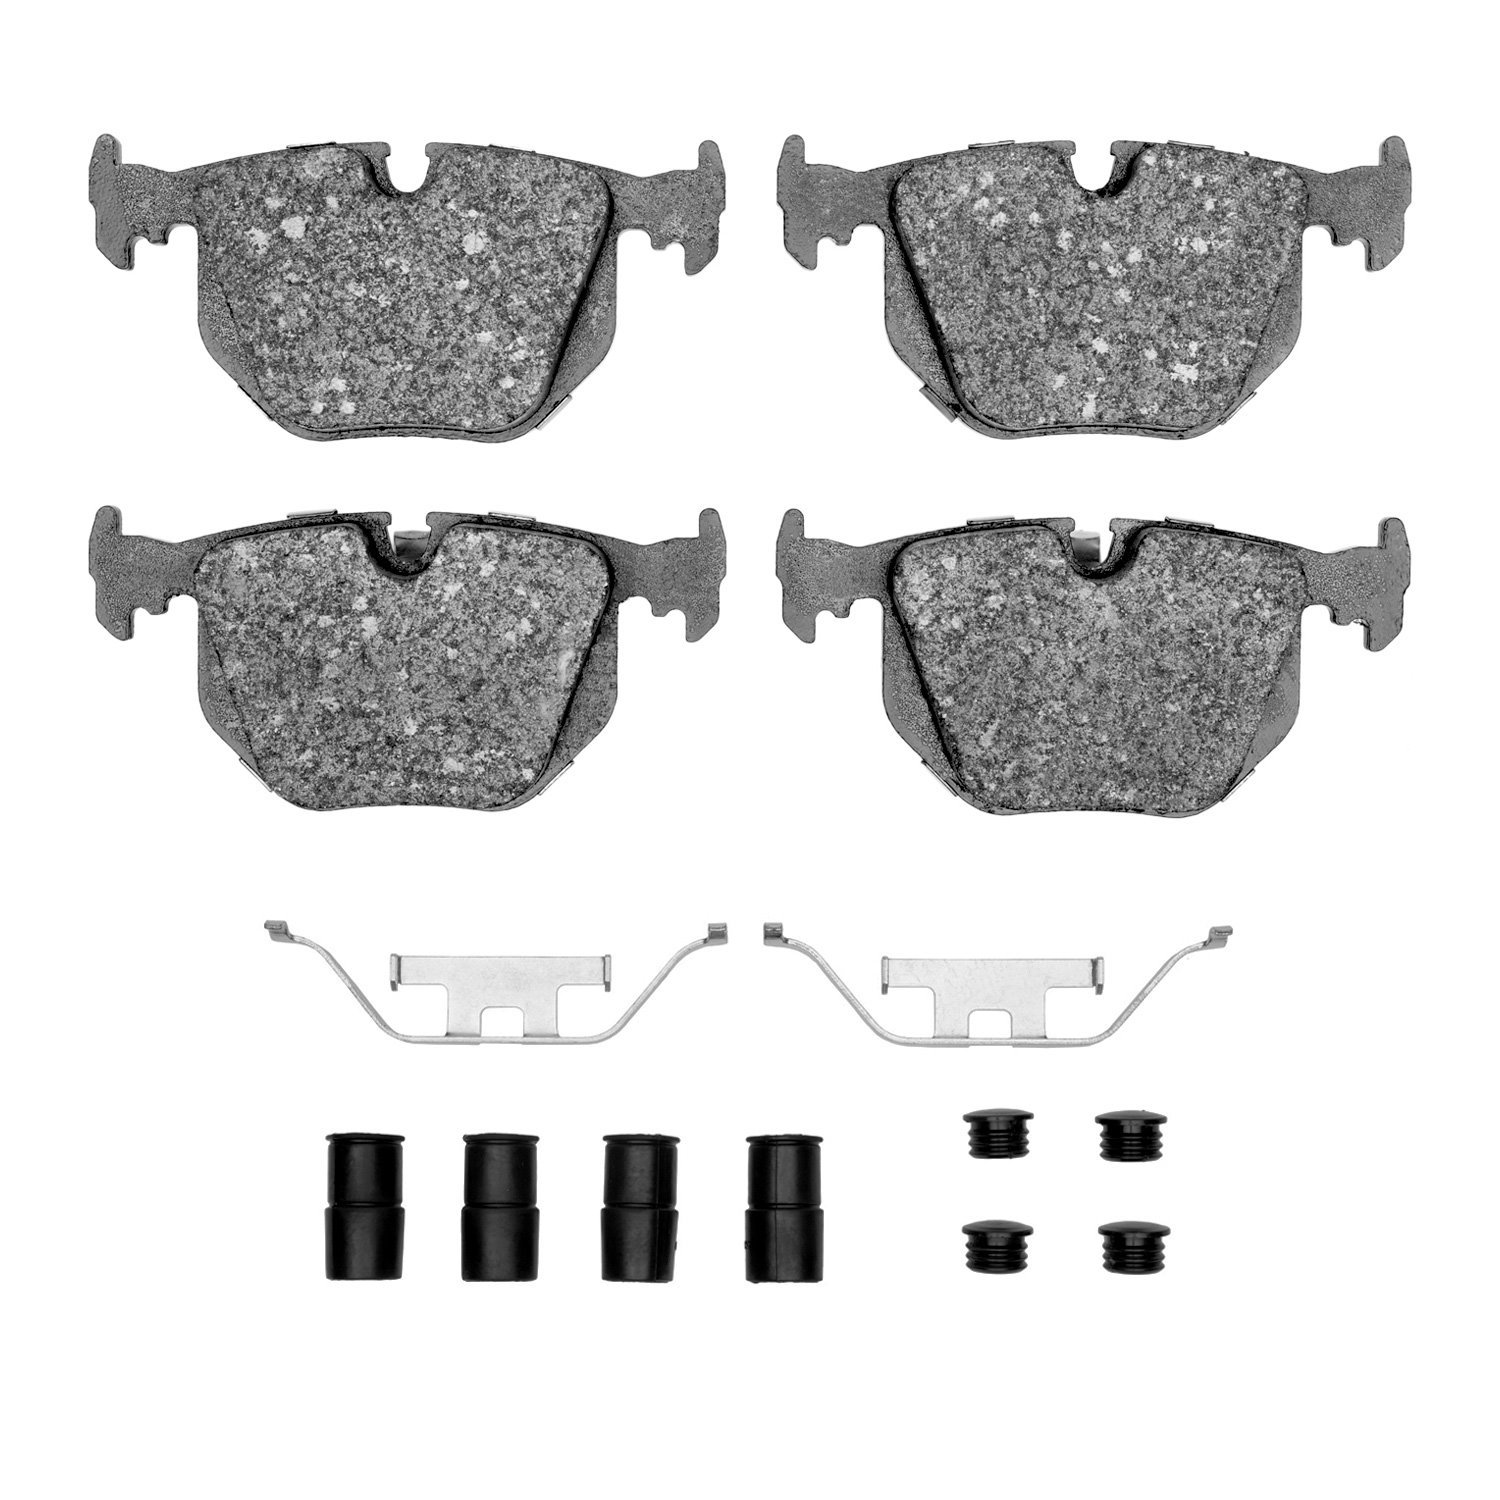 1310-0683-01 3000-Series Ceramic Brake Pads & Hardware Kit, 1991-2010 Multiple Makes/Models, Position: Rear